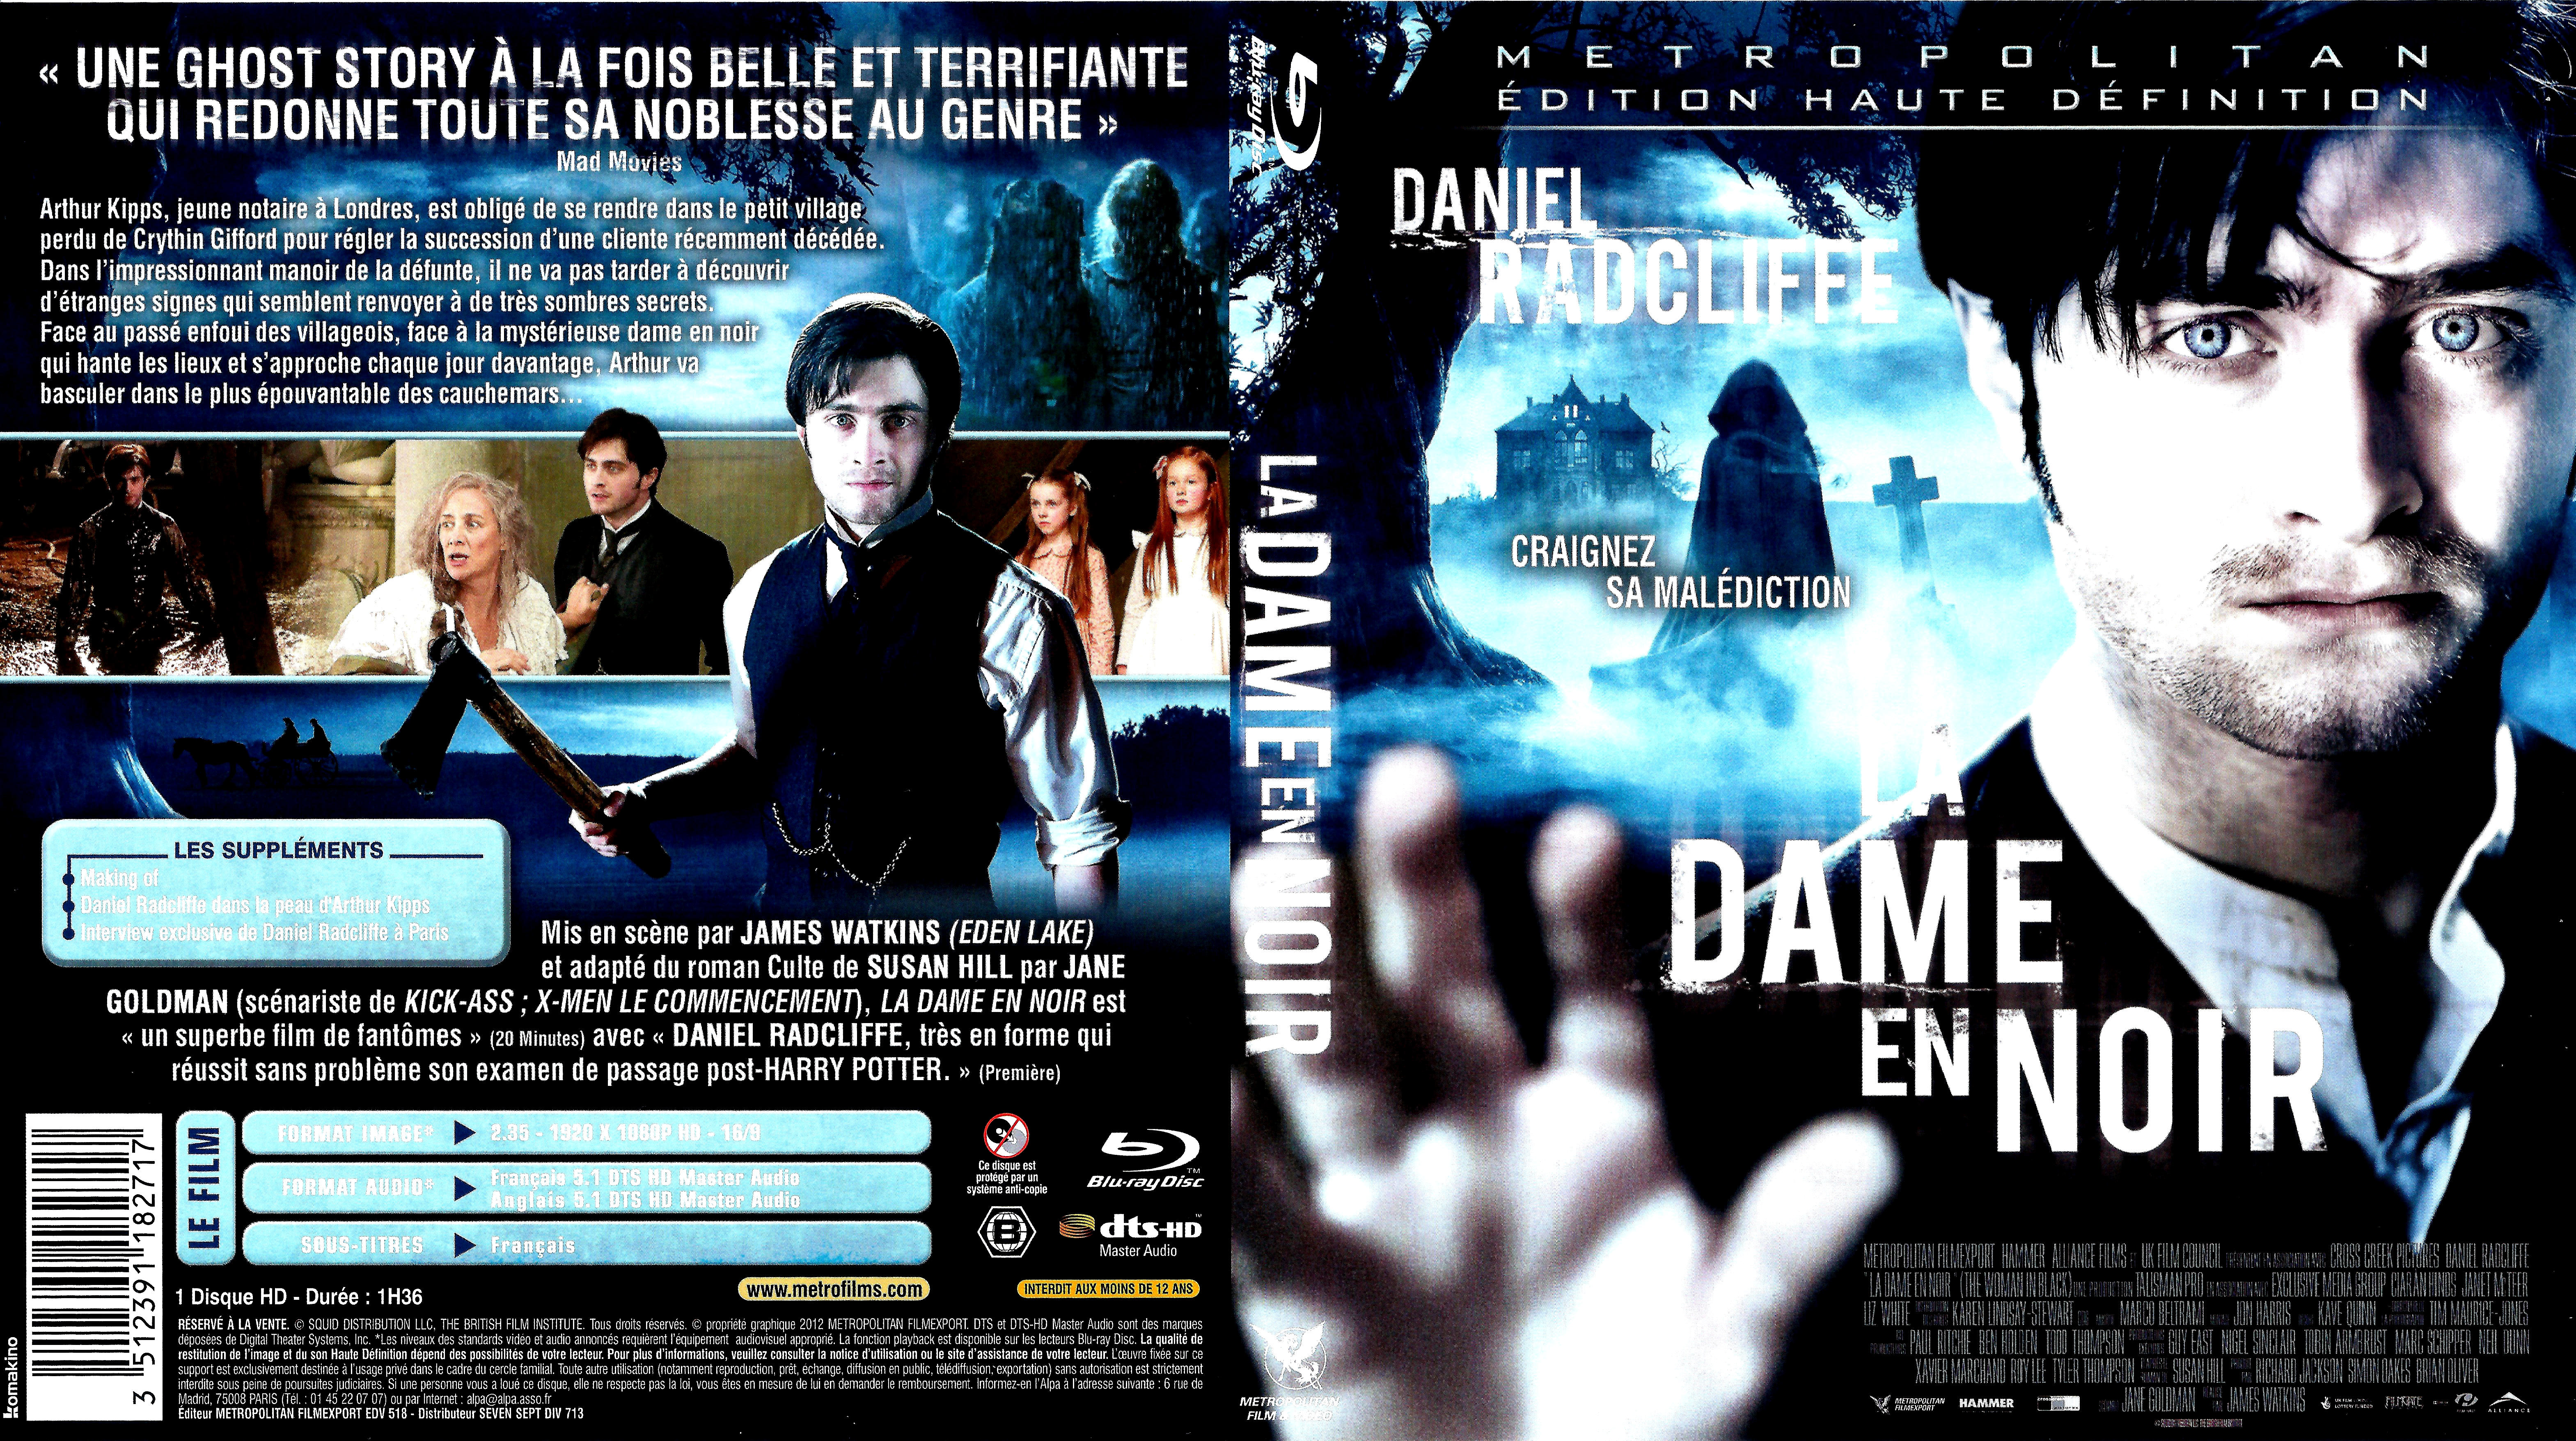 Jaquette DVD La dame en noir (BLU-RAY) v2